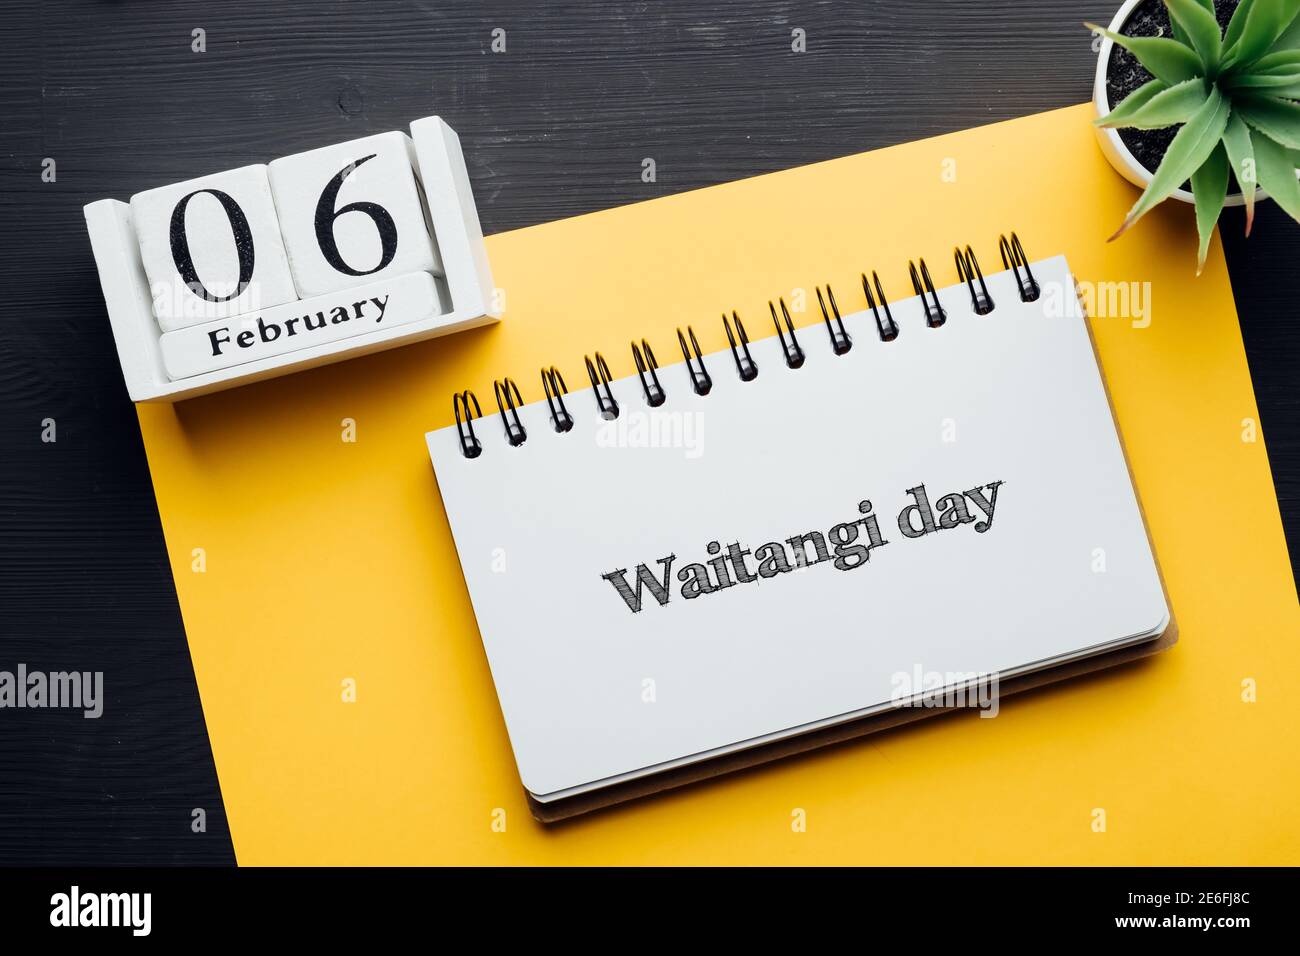 New zealand holiday Waitangi day of winter month calendar february. Stock Photo